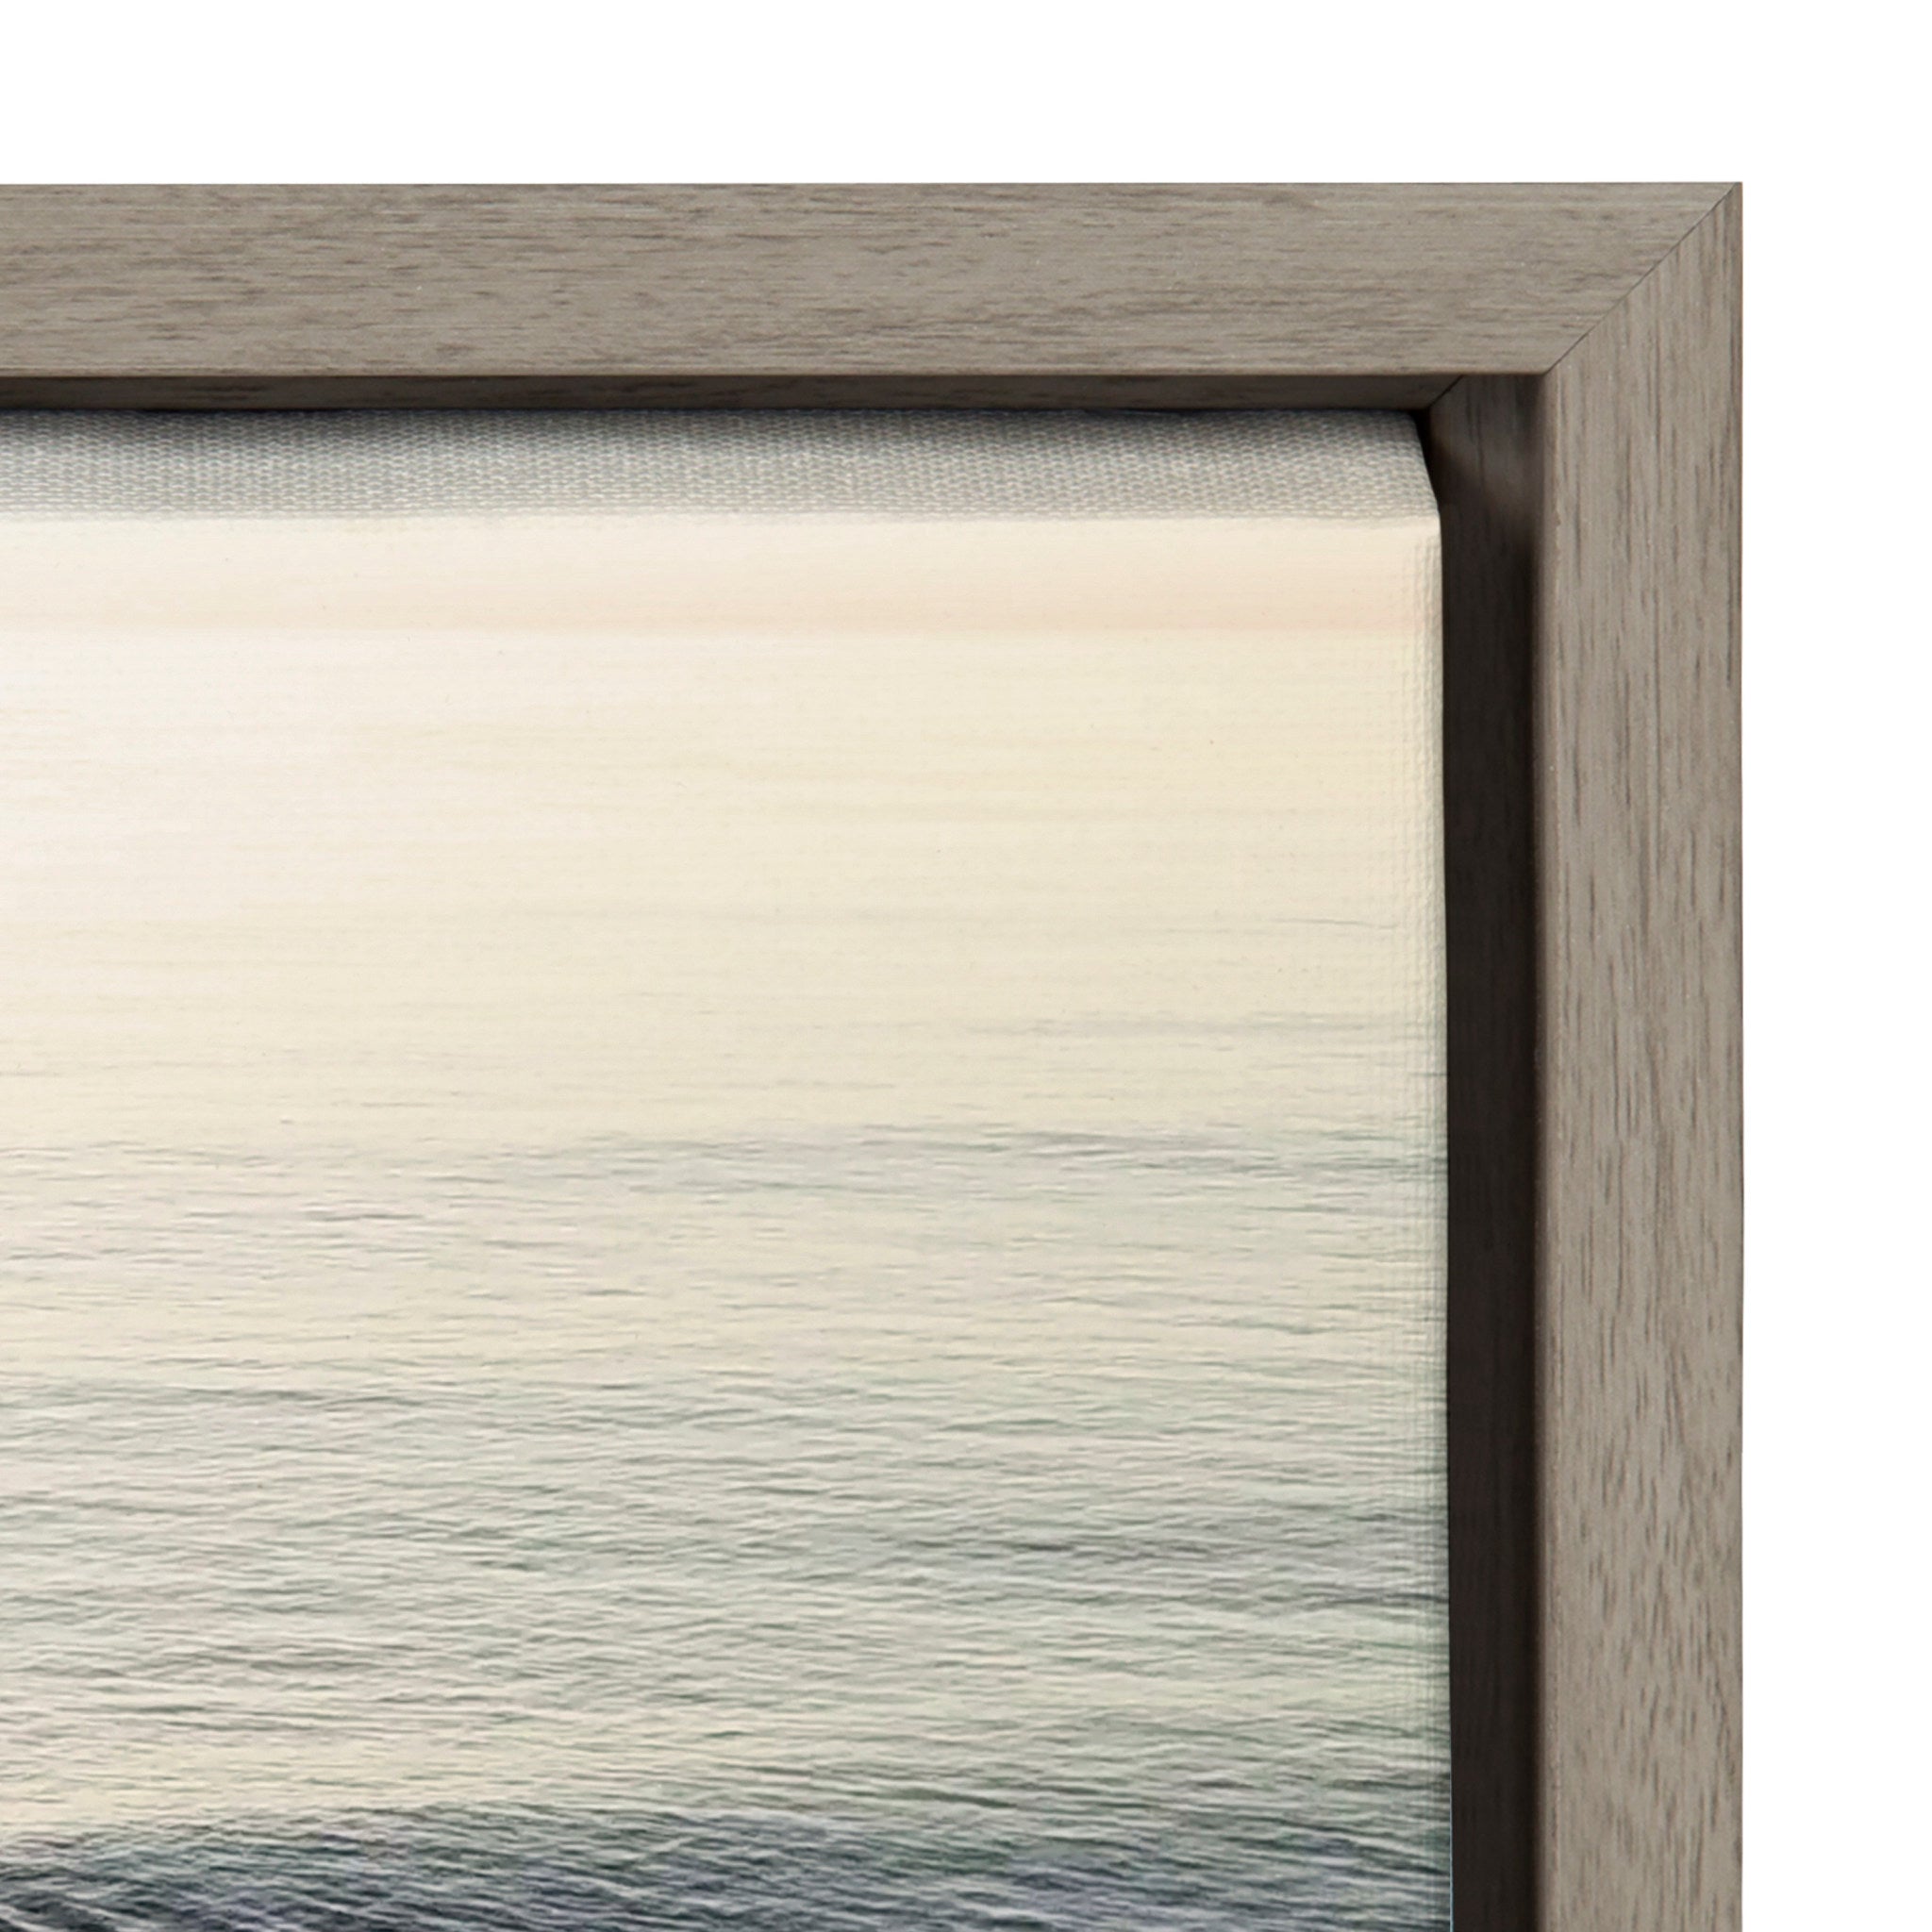 Sylvie La Jolla 1 Framed Canvas by Rachel Bolgov